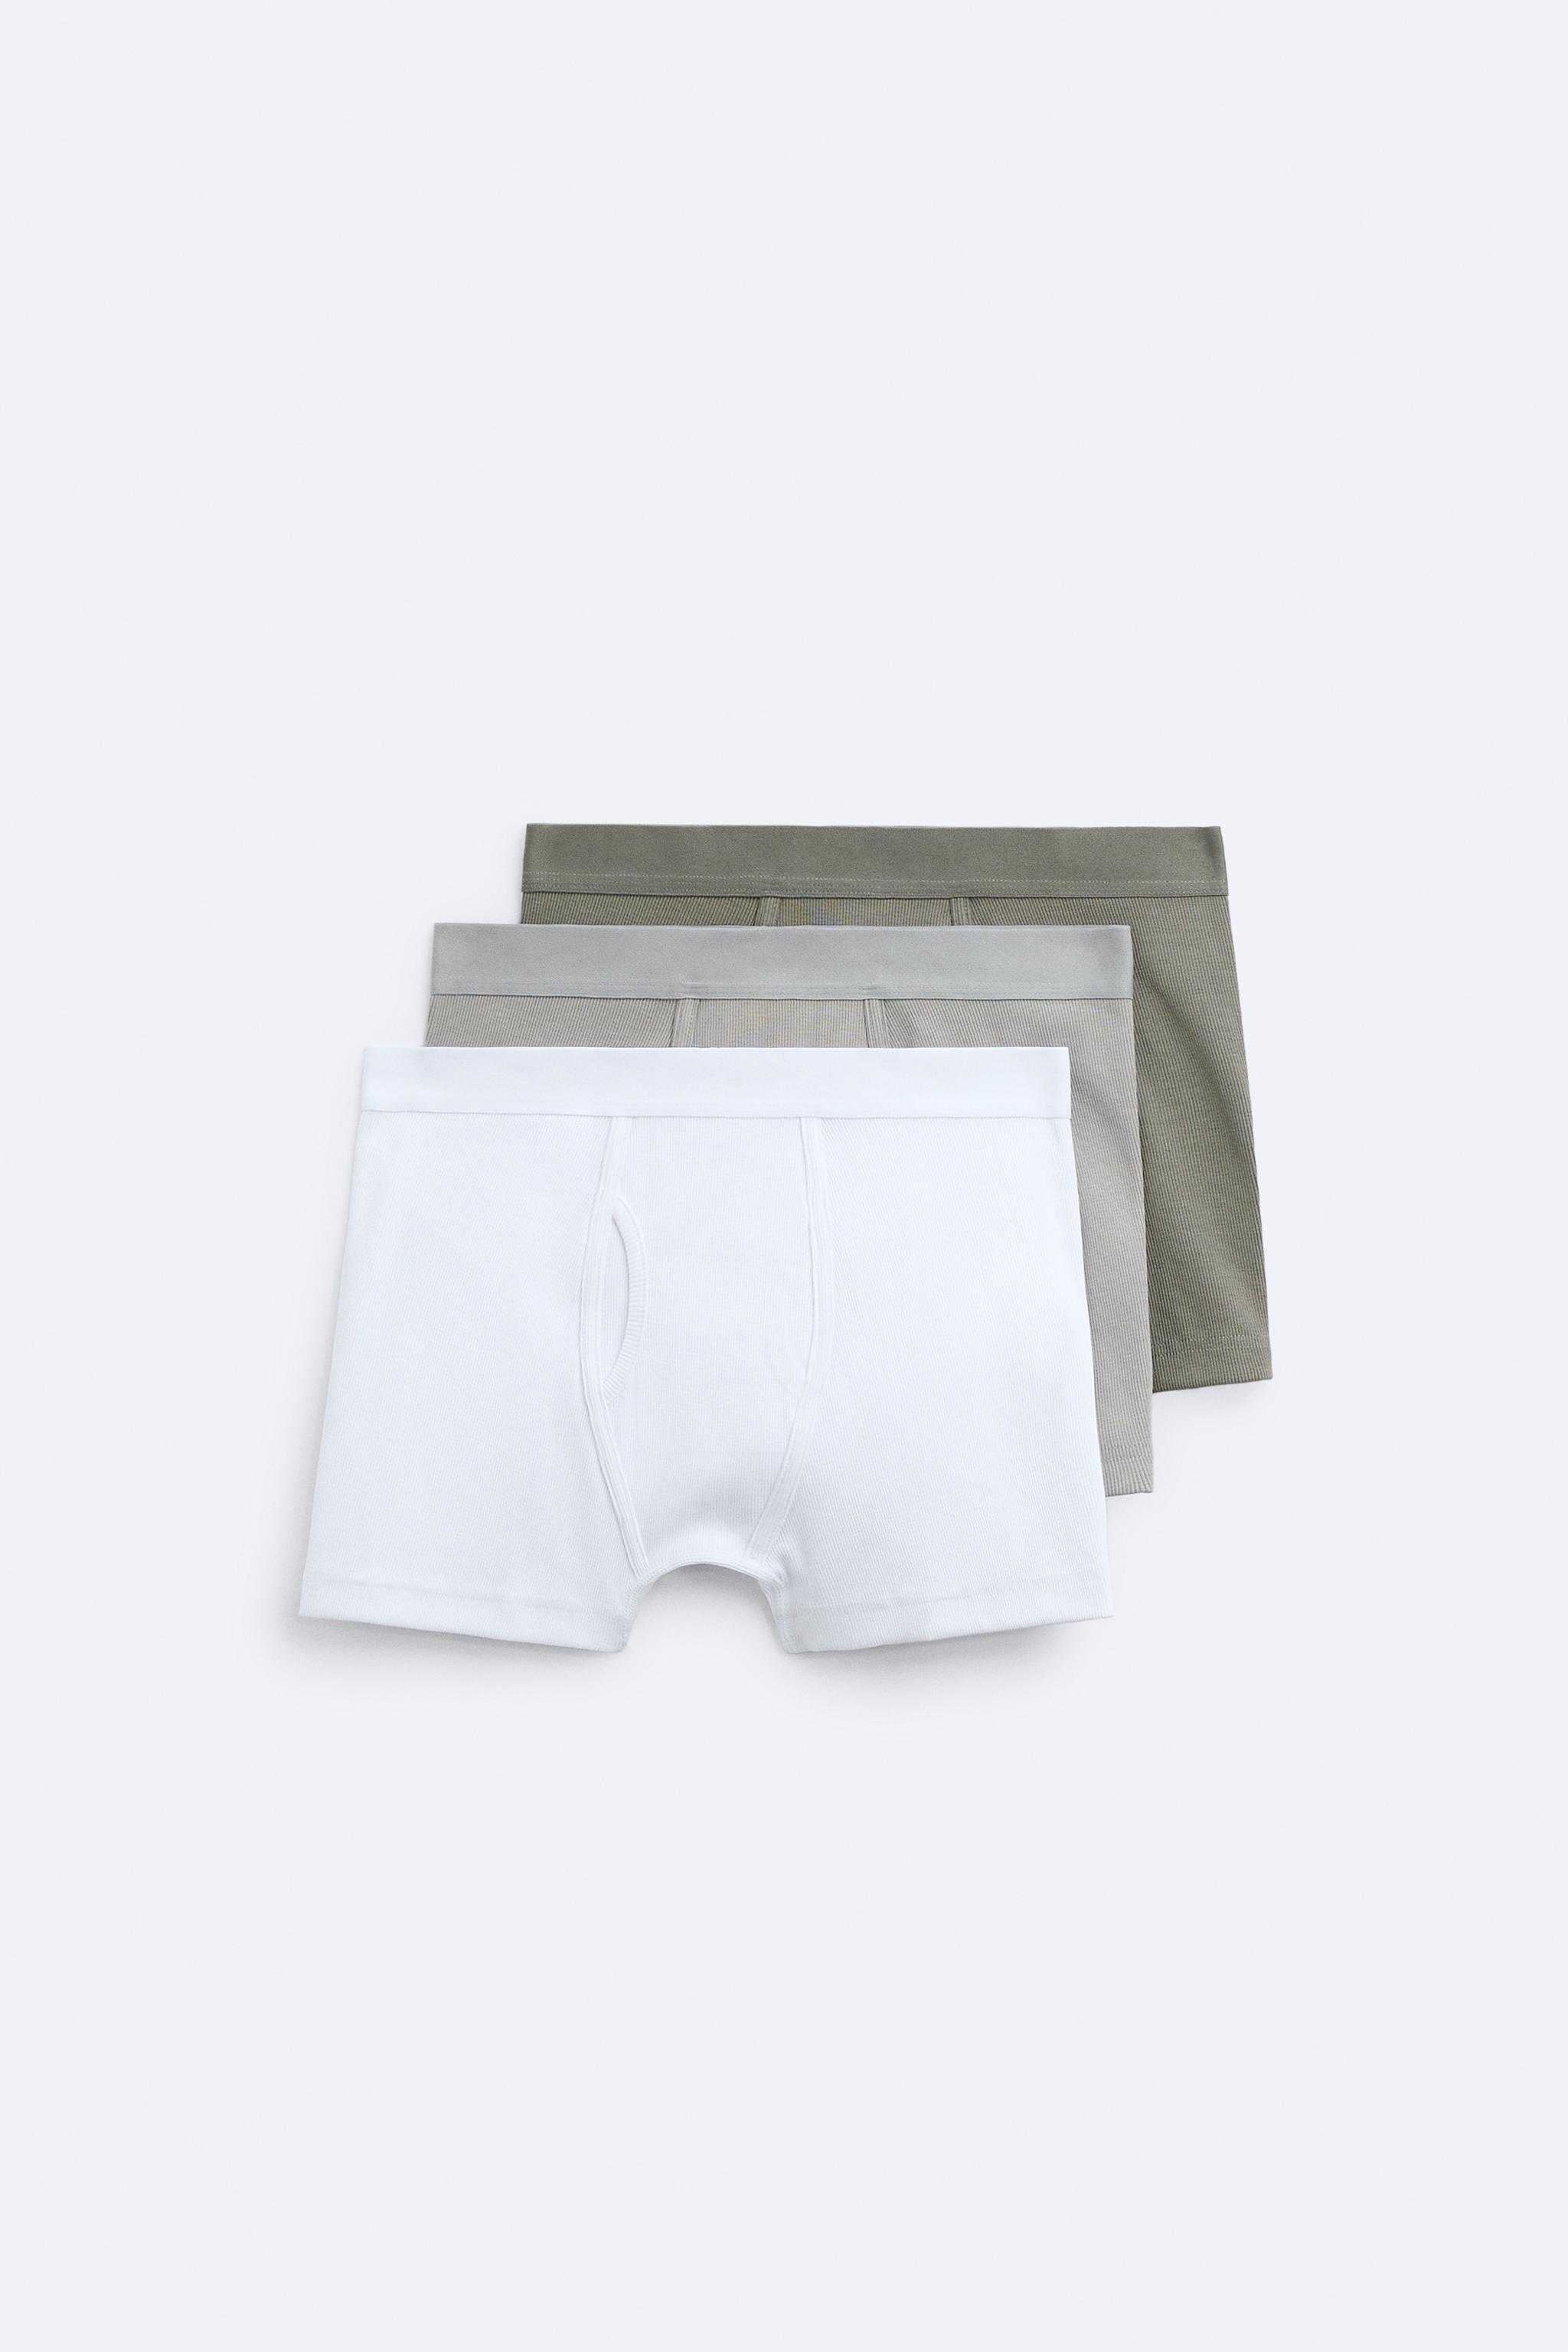 Buy G3 Ladies Boxer Shorts Underwear Multi Pack - Womens Seamless